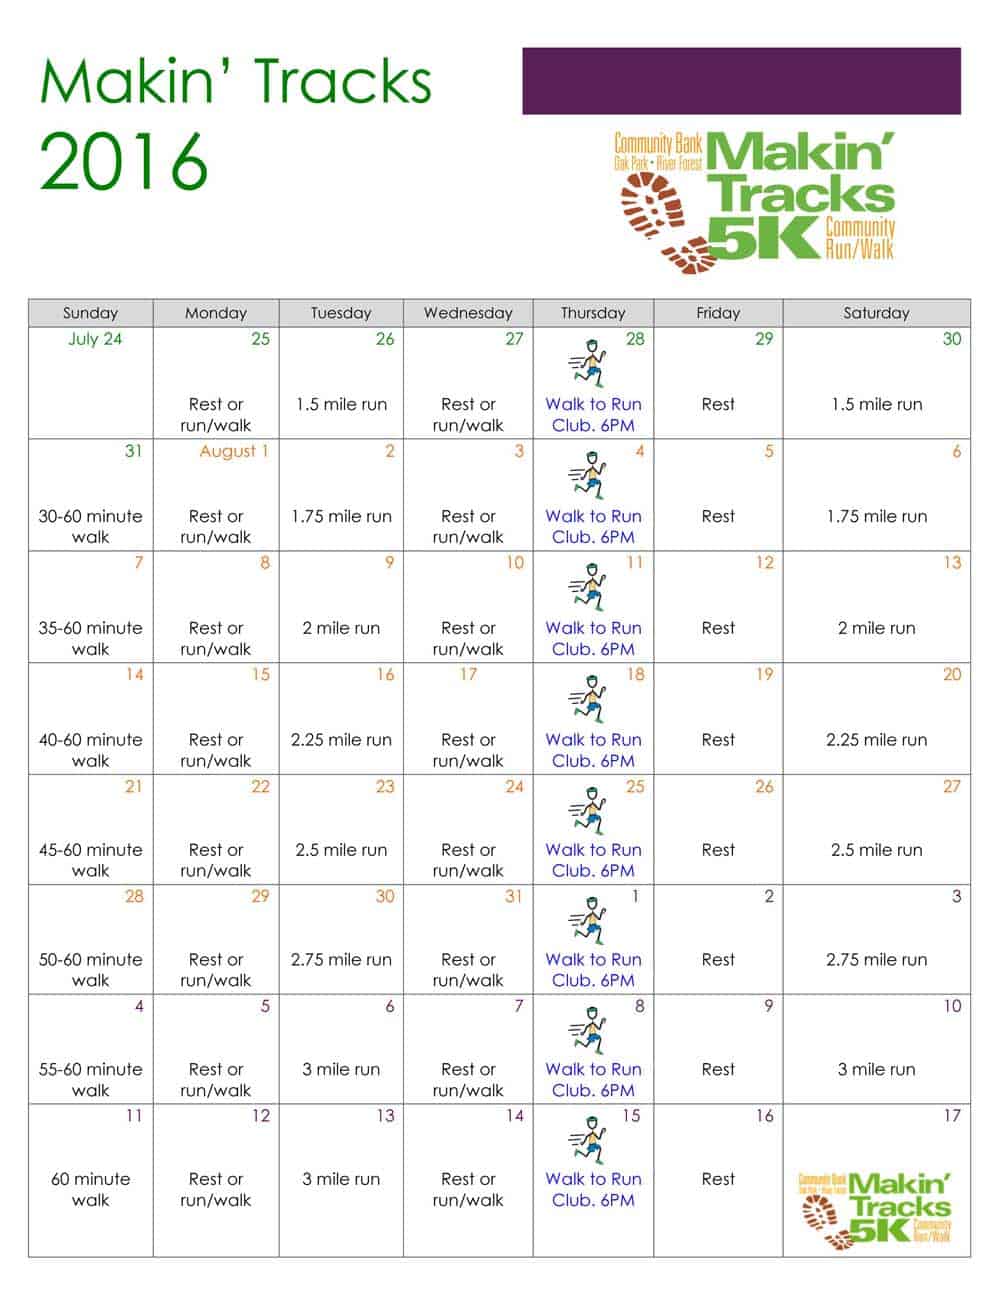 Microsoft Word - Makin’ Tracks training calendar 2016.docx